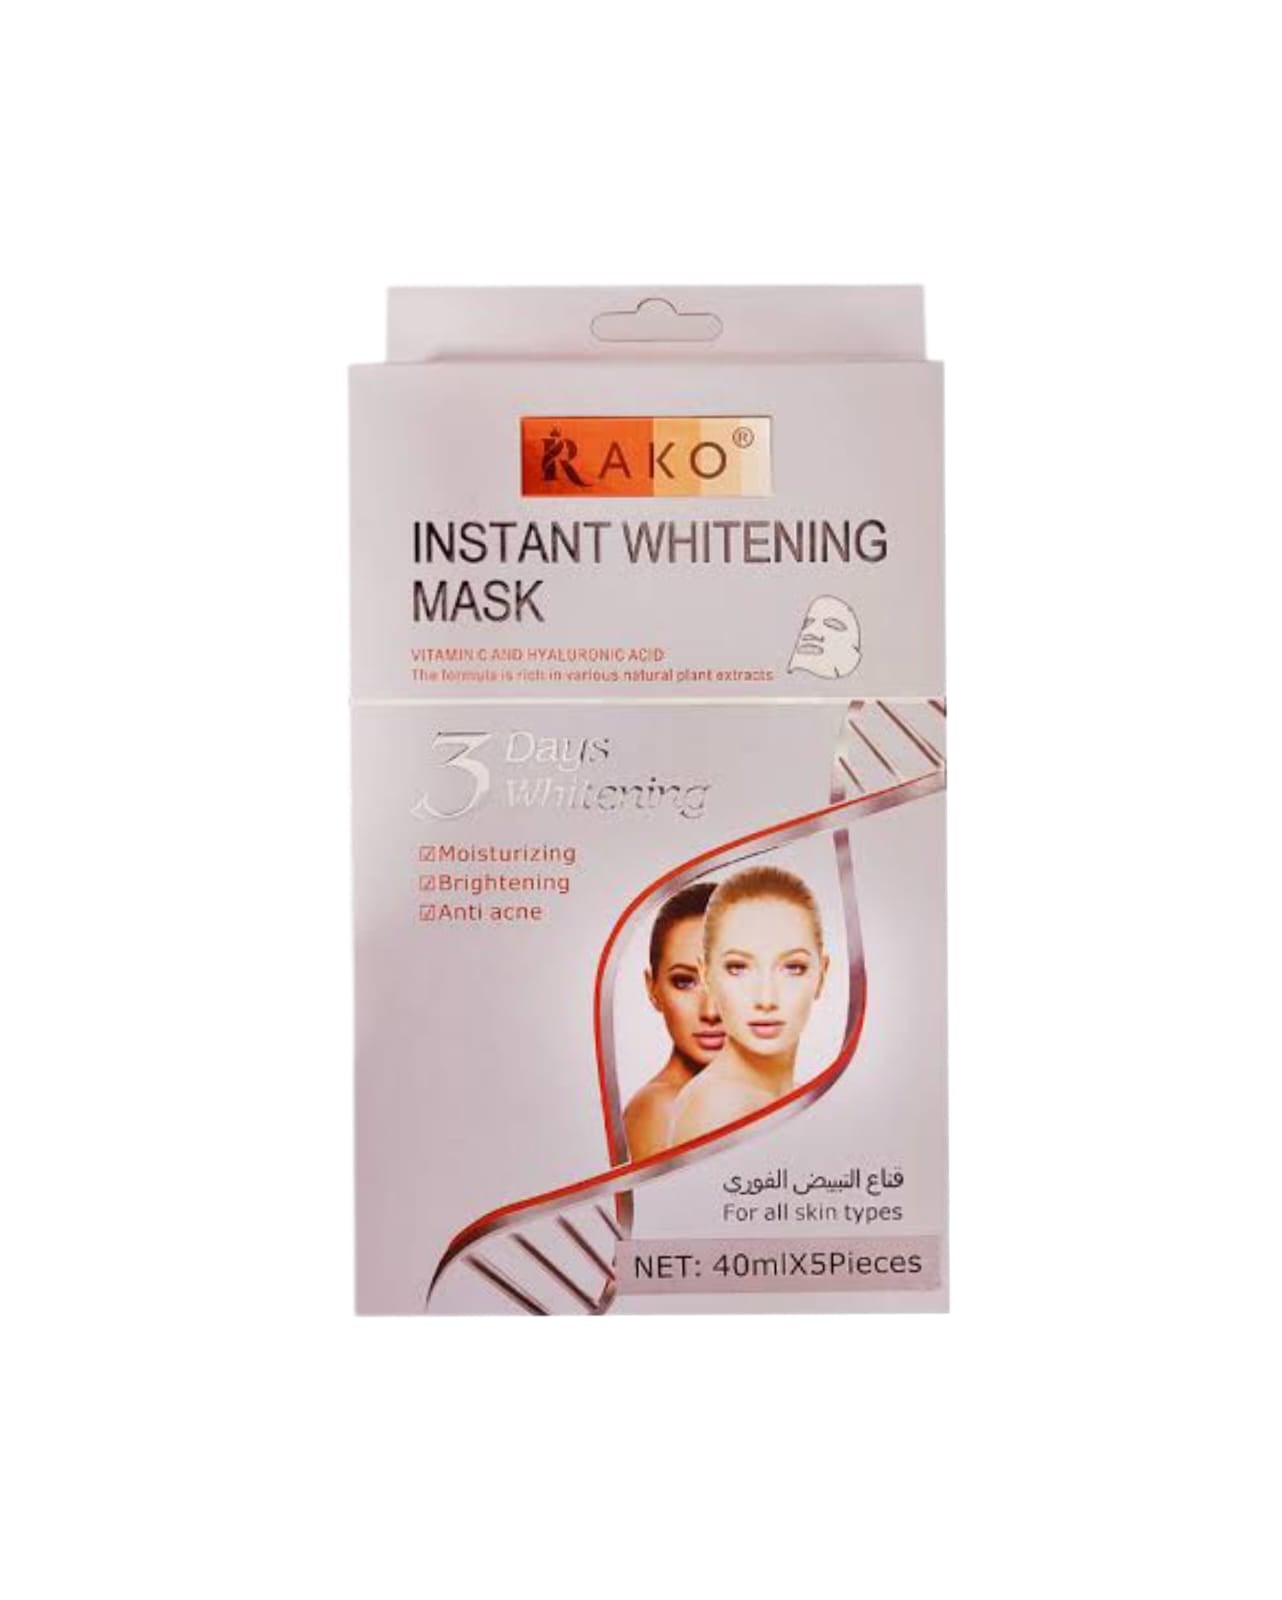 RAKO Instant Whitening Mask 3Days Whitening